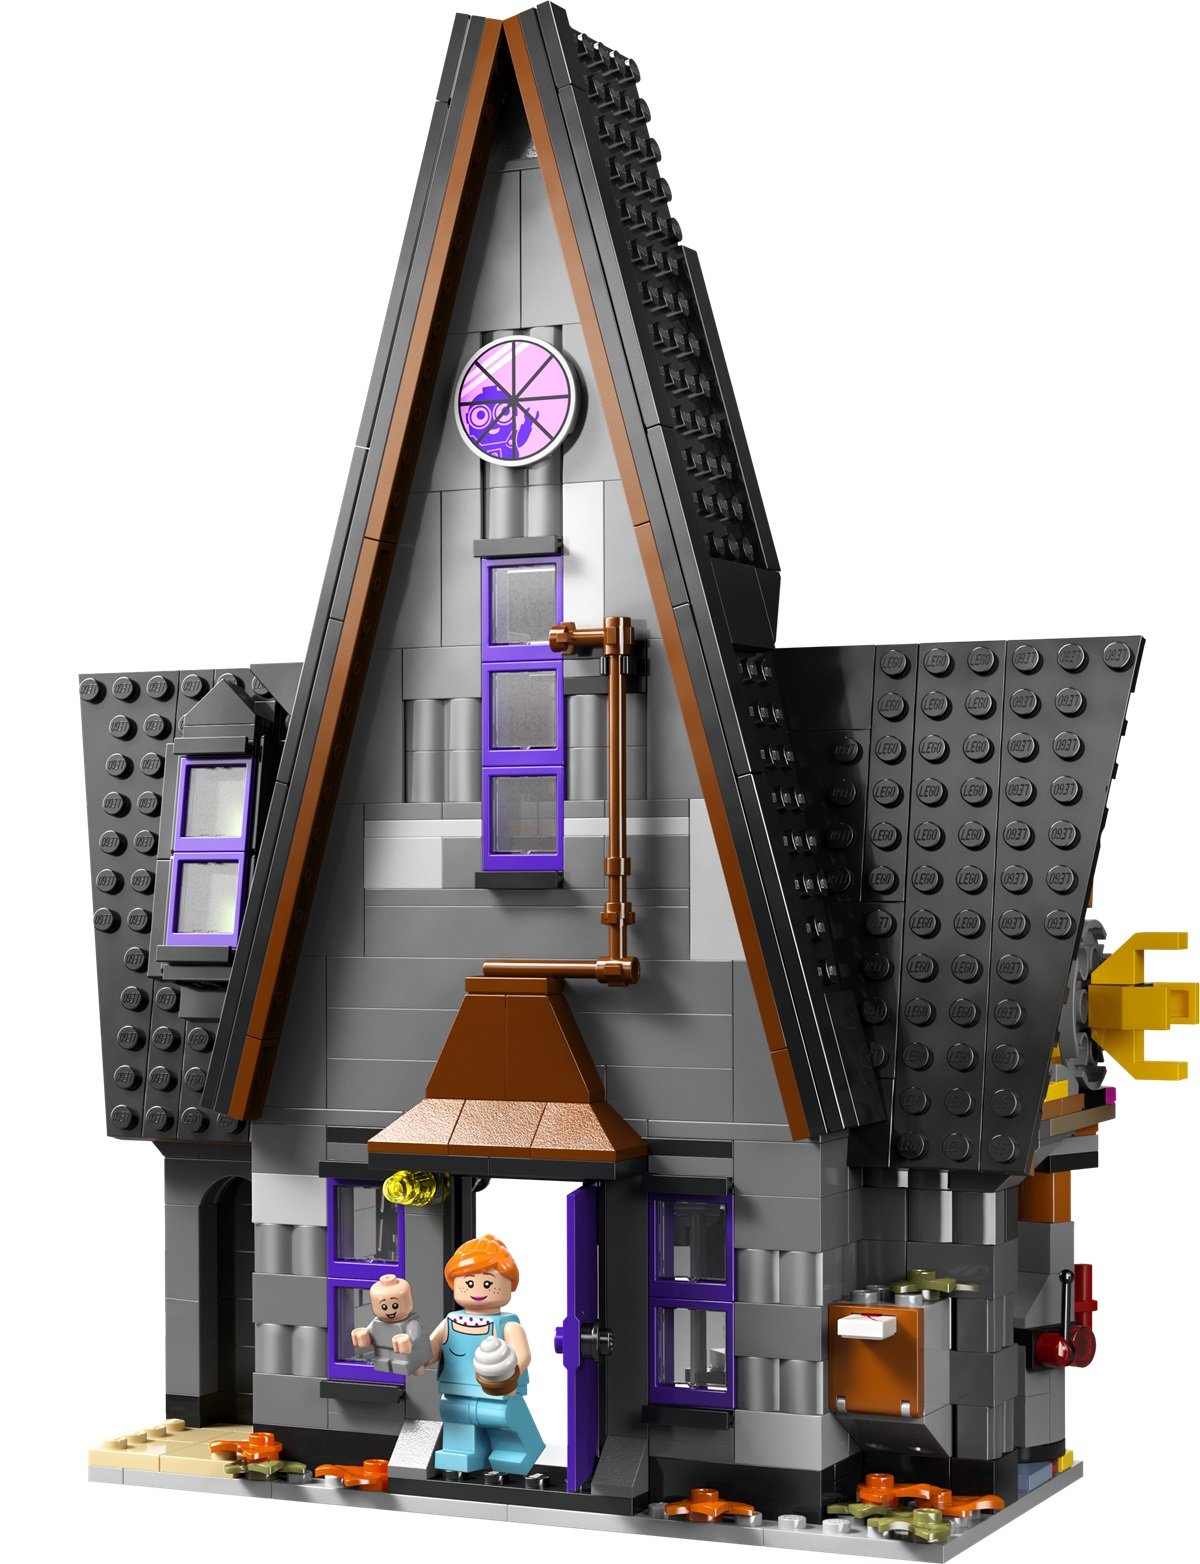 The LEGO Despicable Me 4 mansion set. 